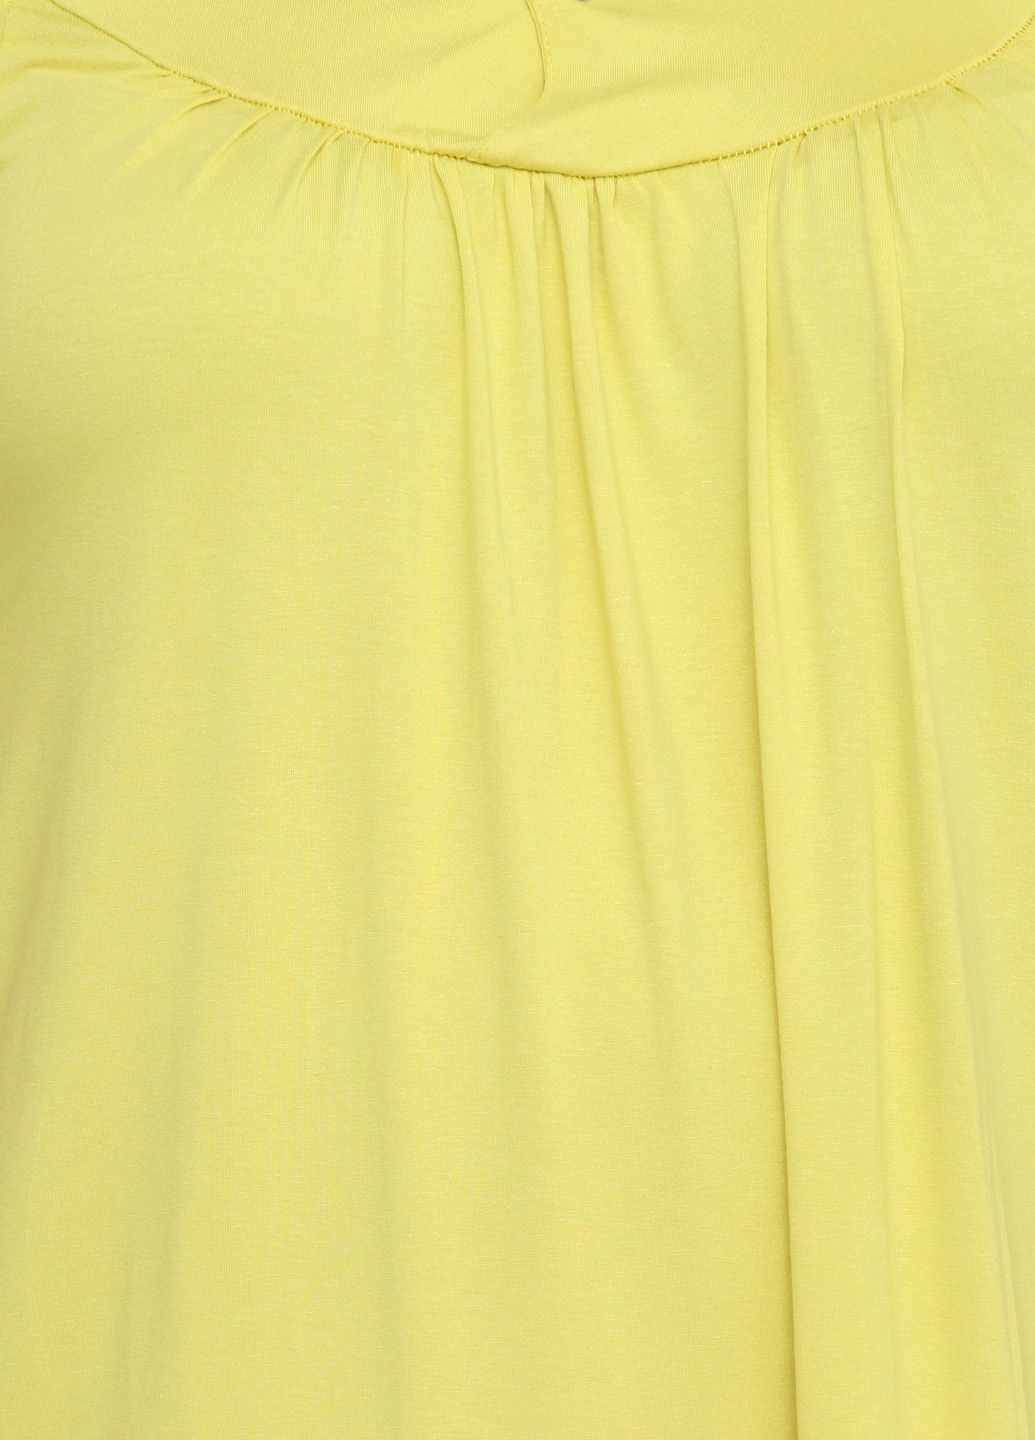 Ночная рубашка Radda однотонная жёлтая домашняя